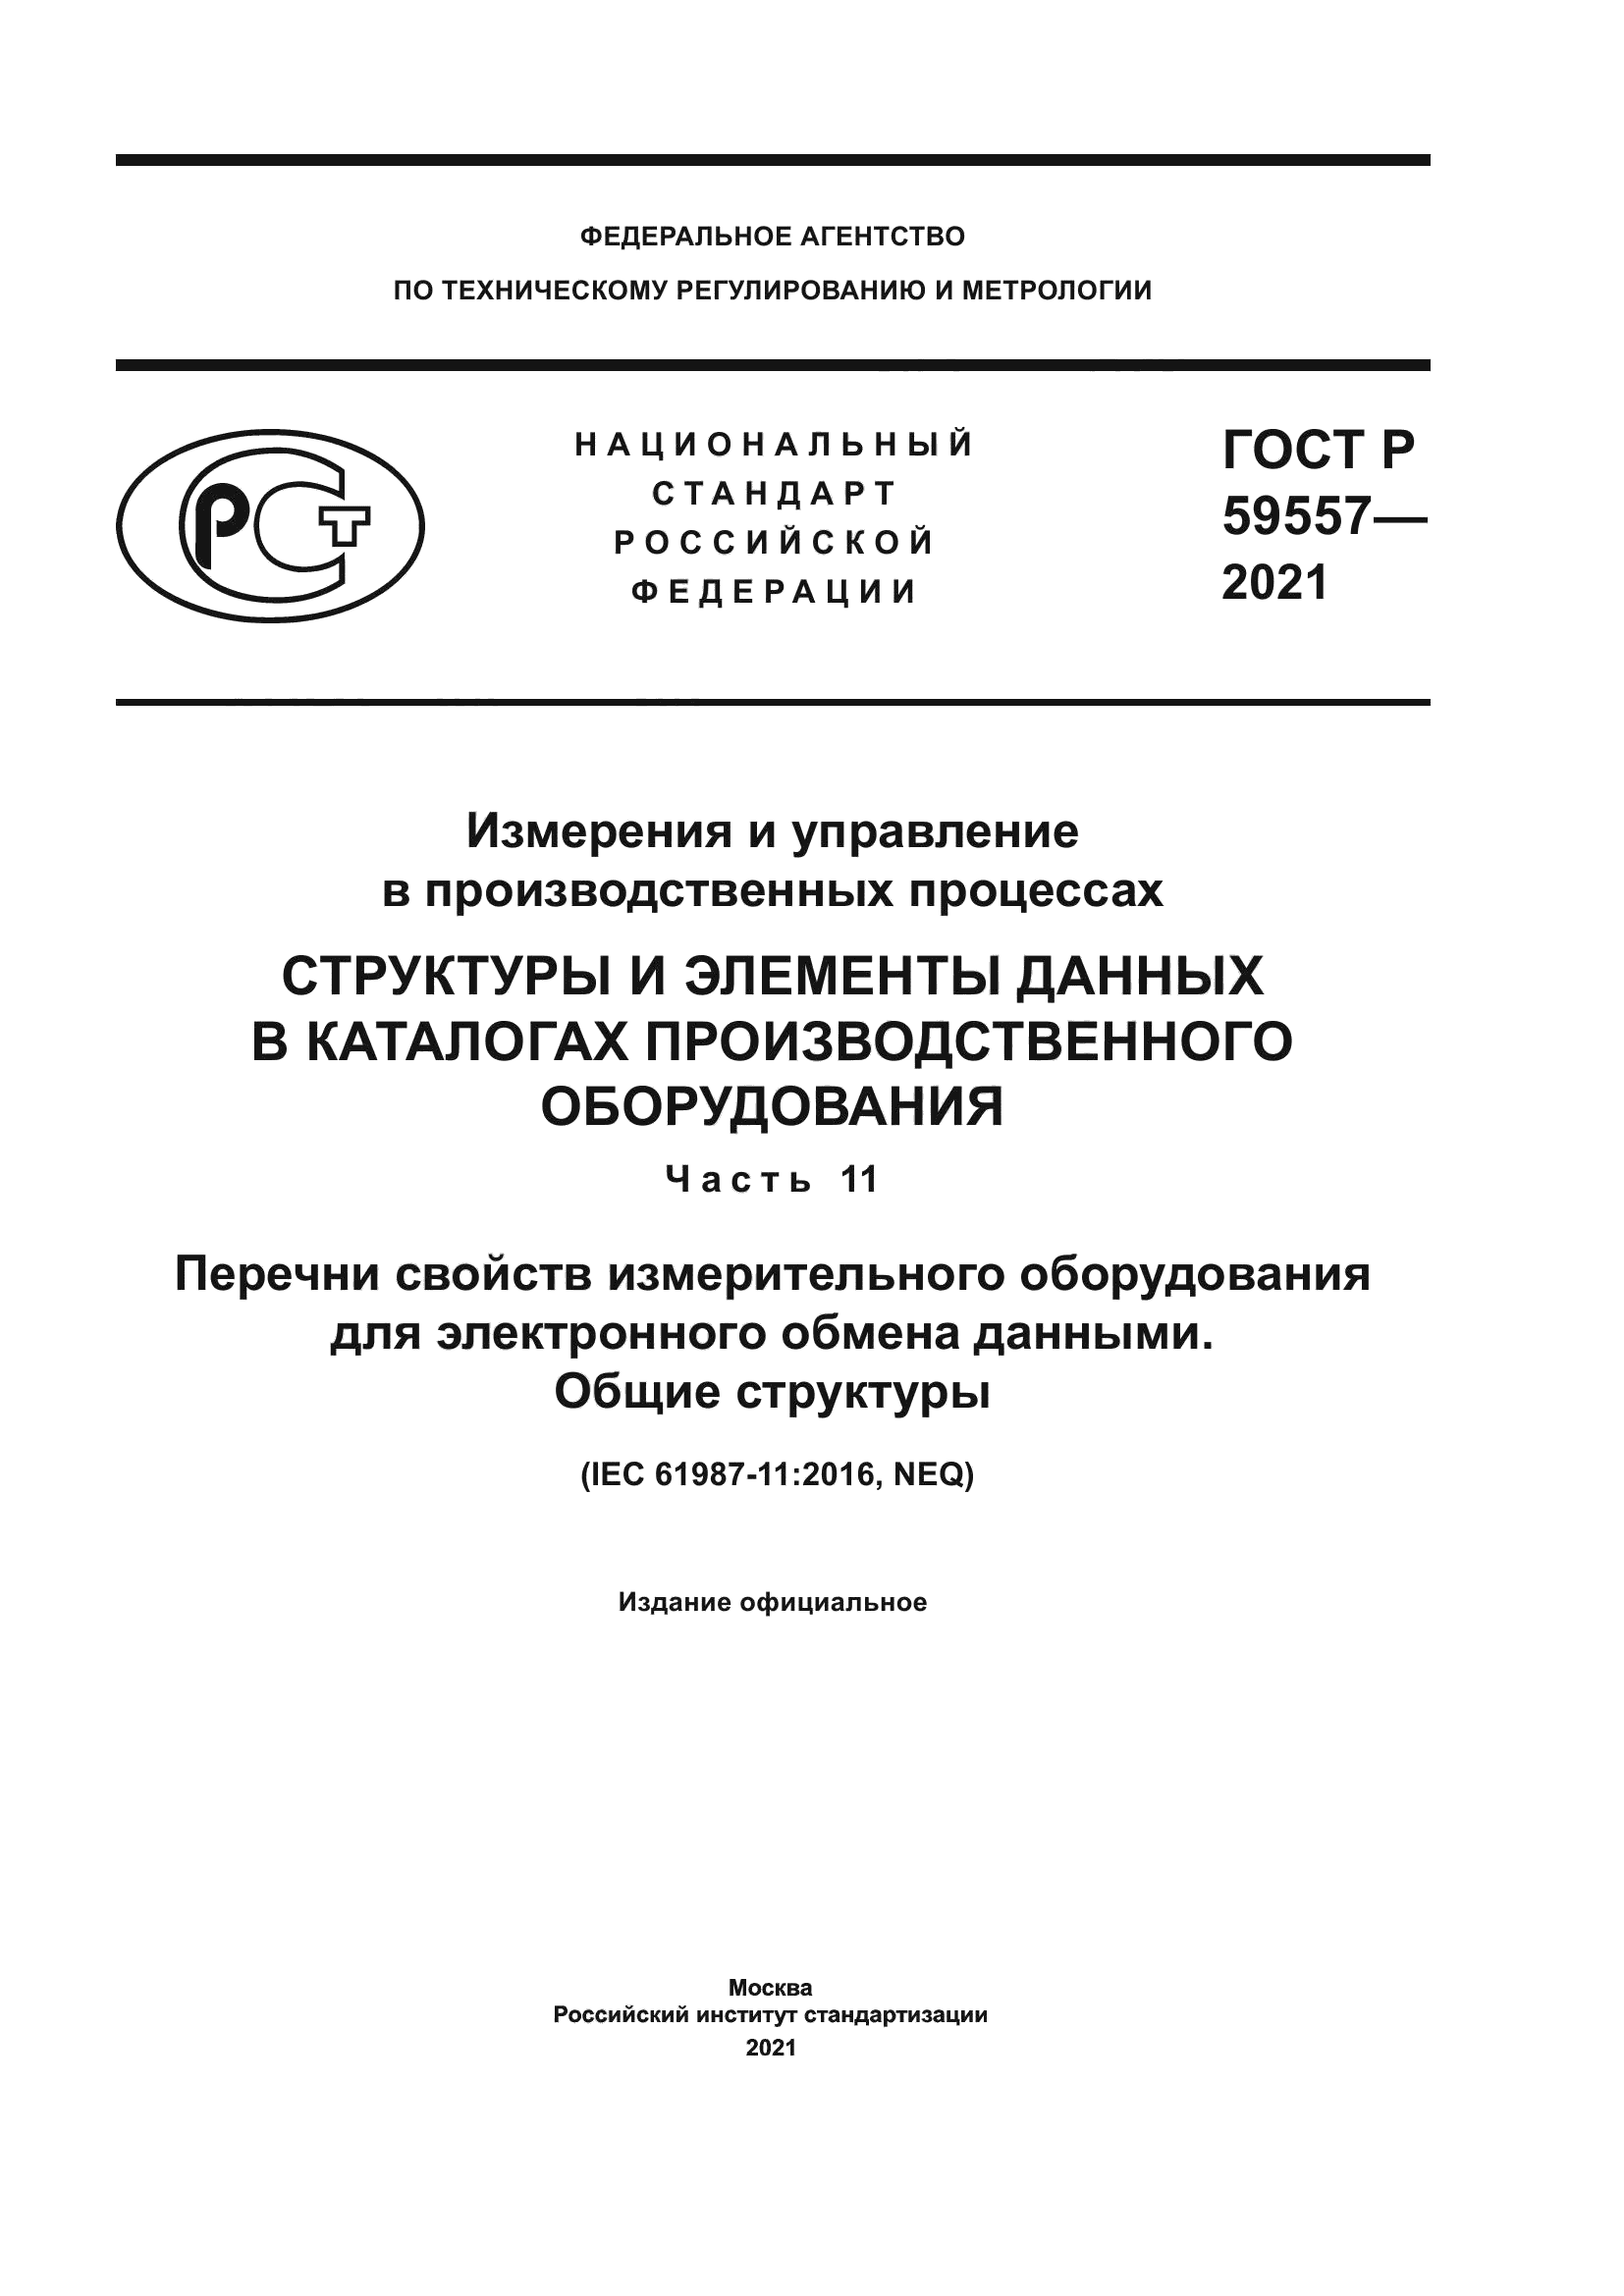 ГОСТ Р 59557-2021